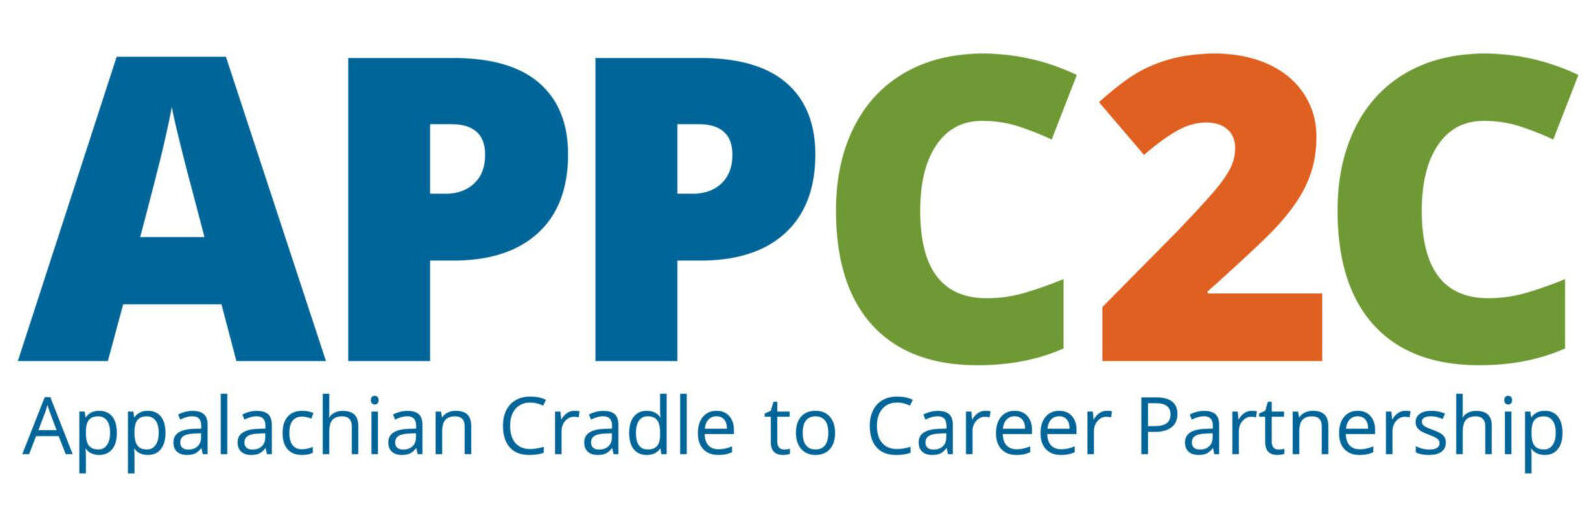 Appalachian Cradle to Career Partnership